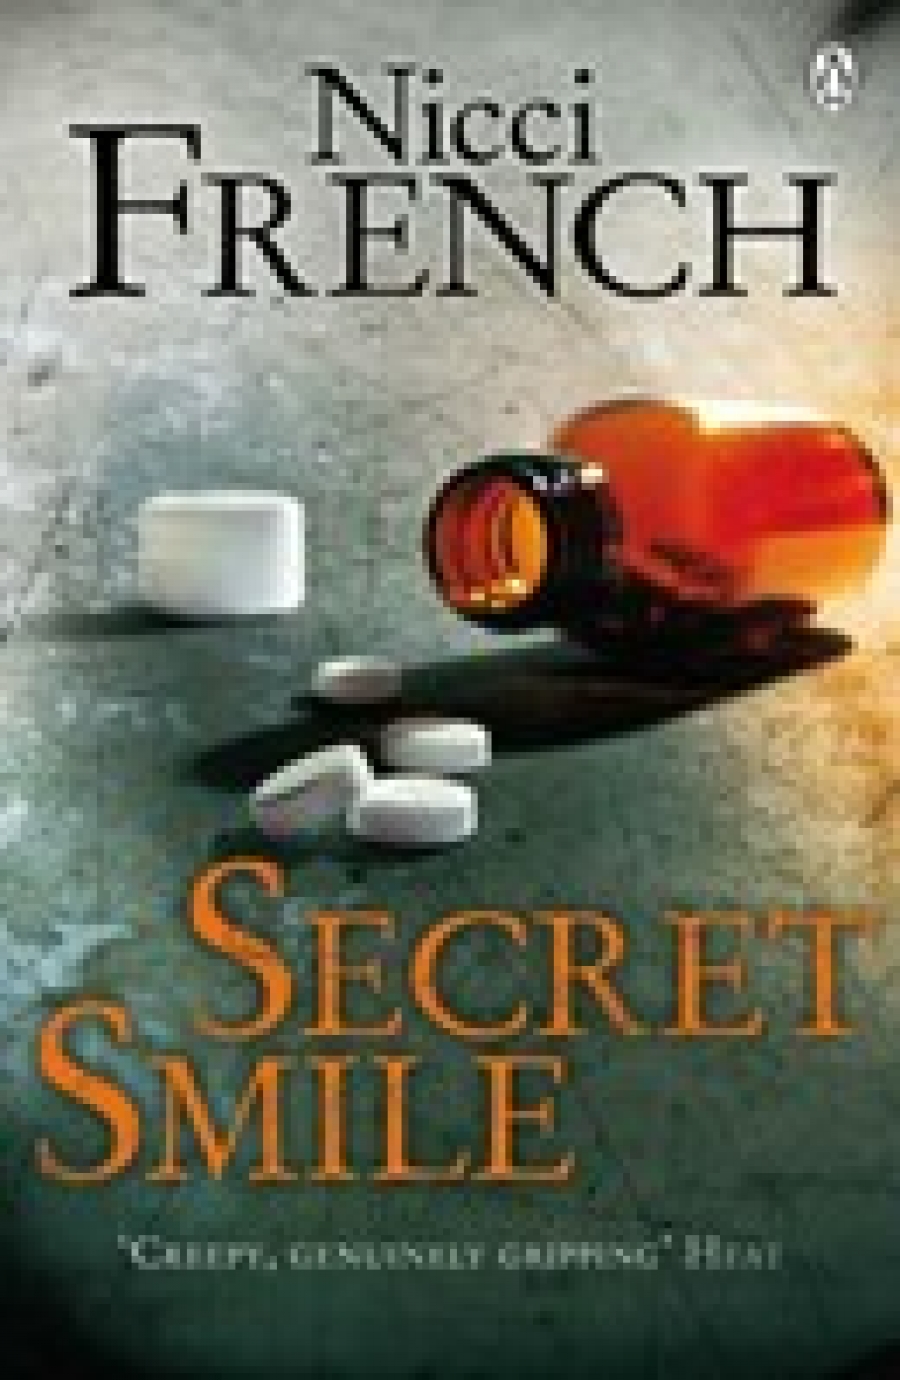 French, Nicci Secret Smile 